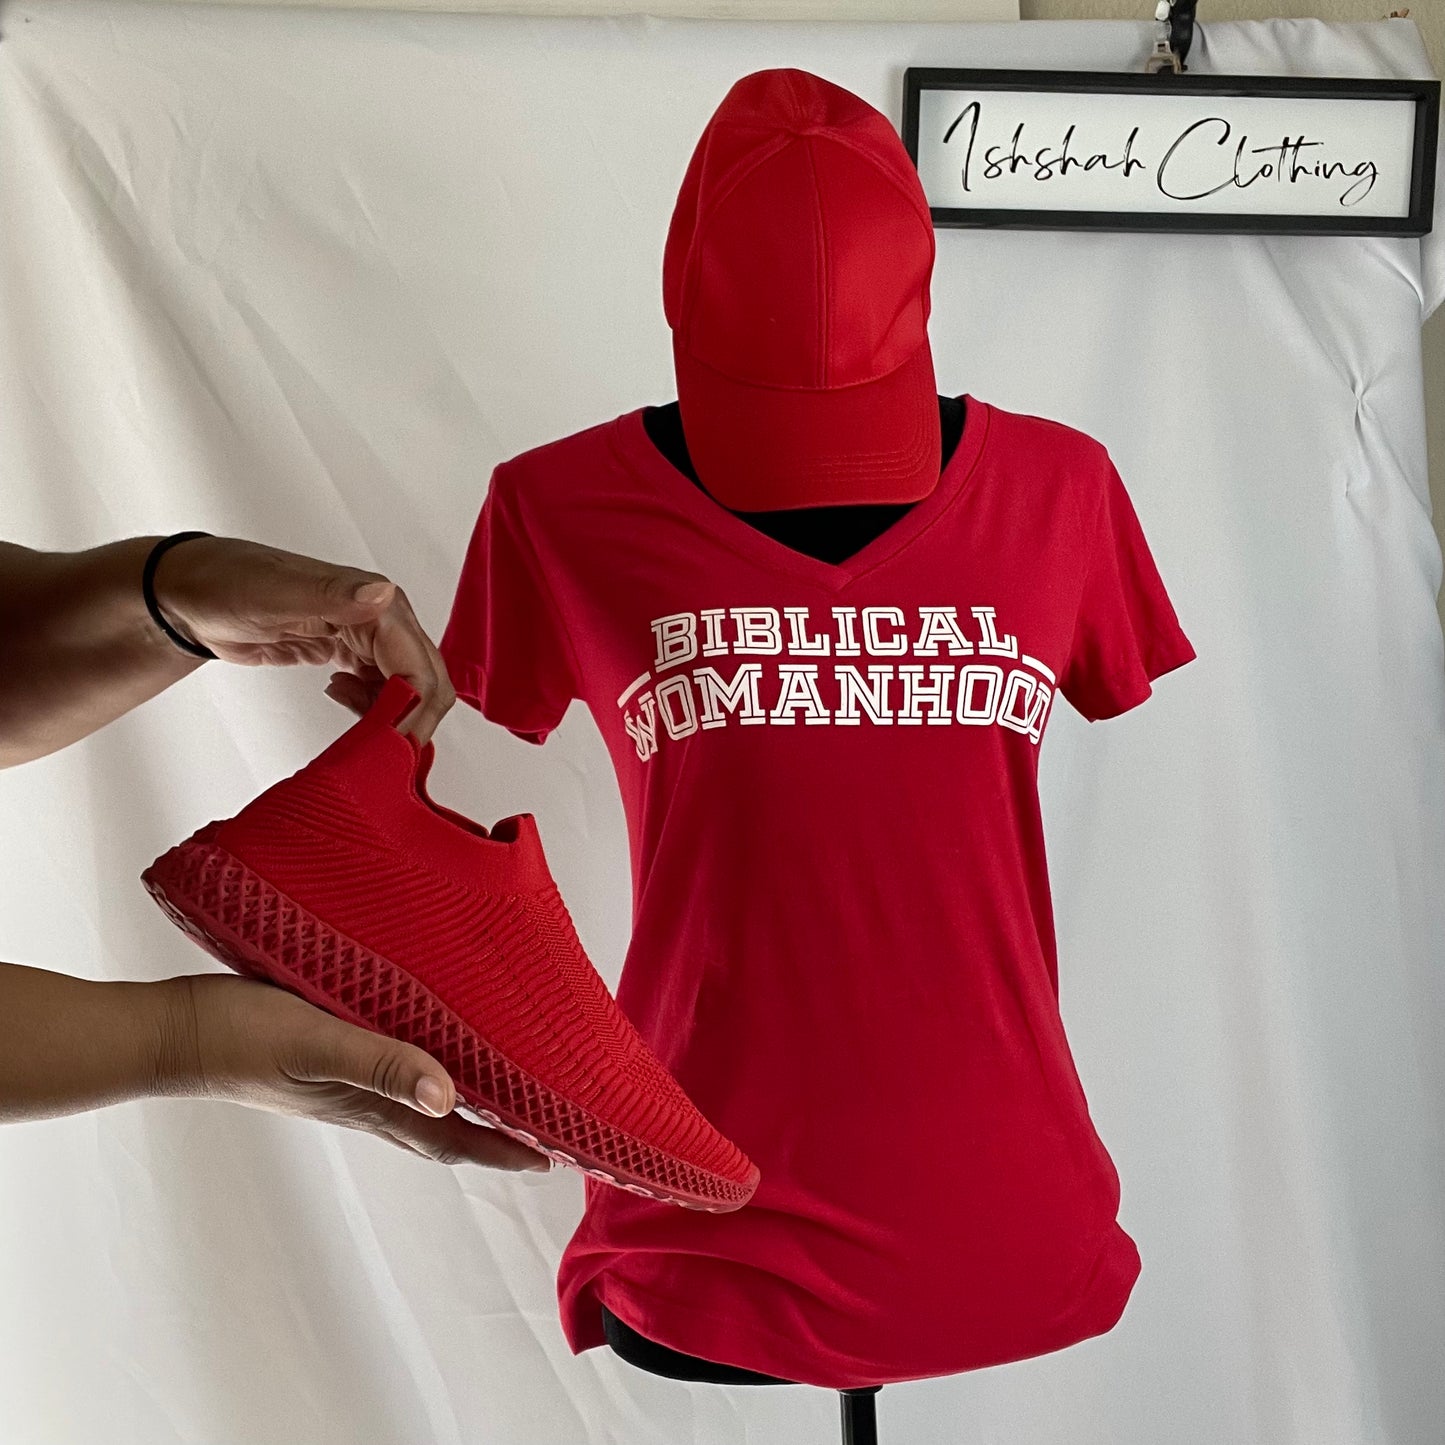 Biblical Womanhood T-Shirt Red